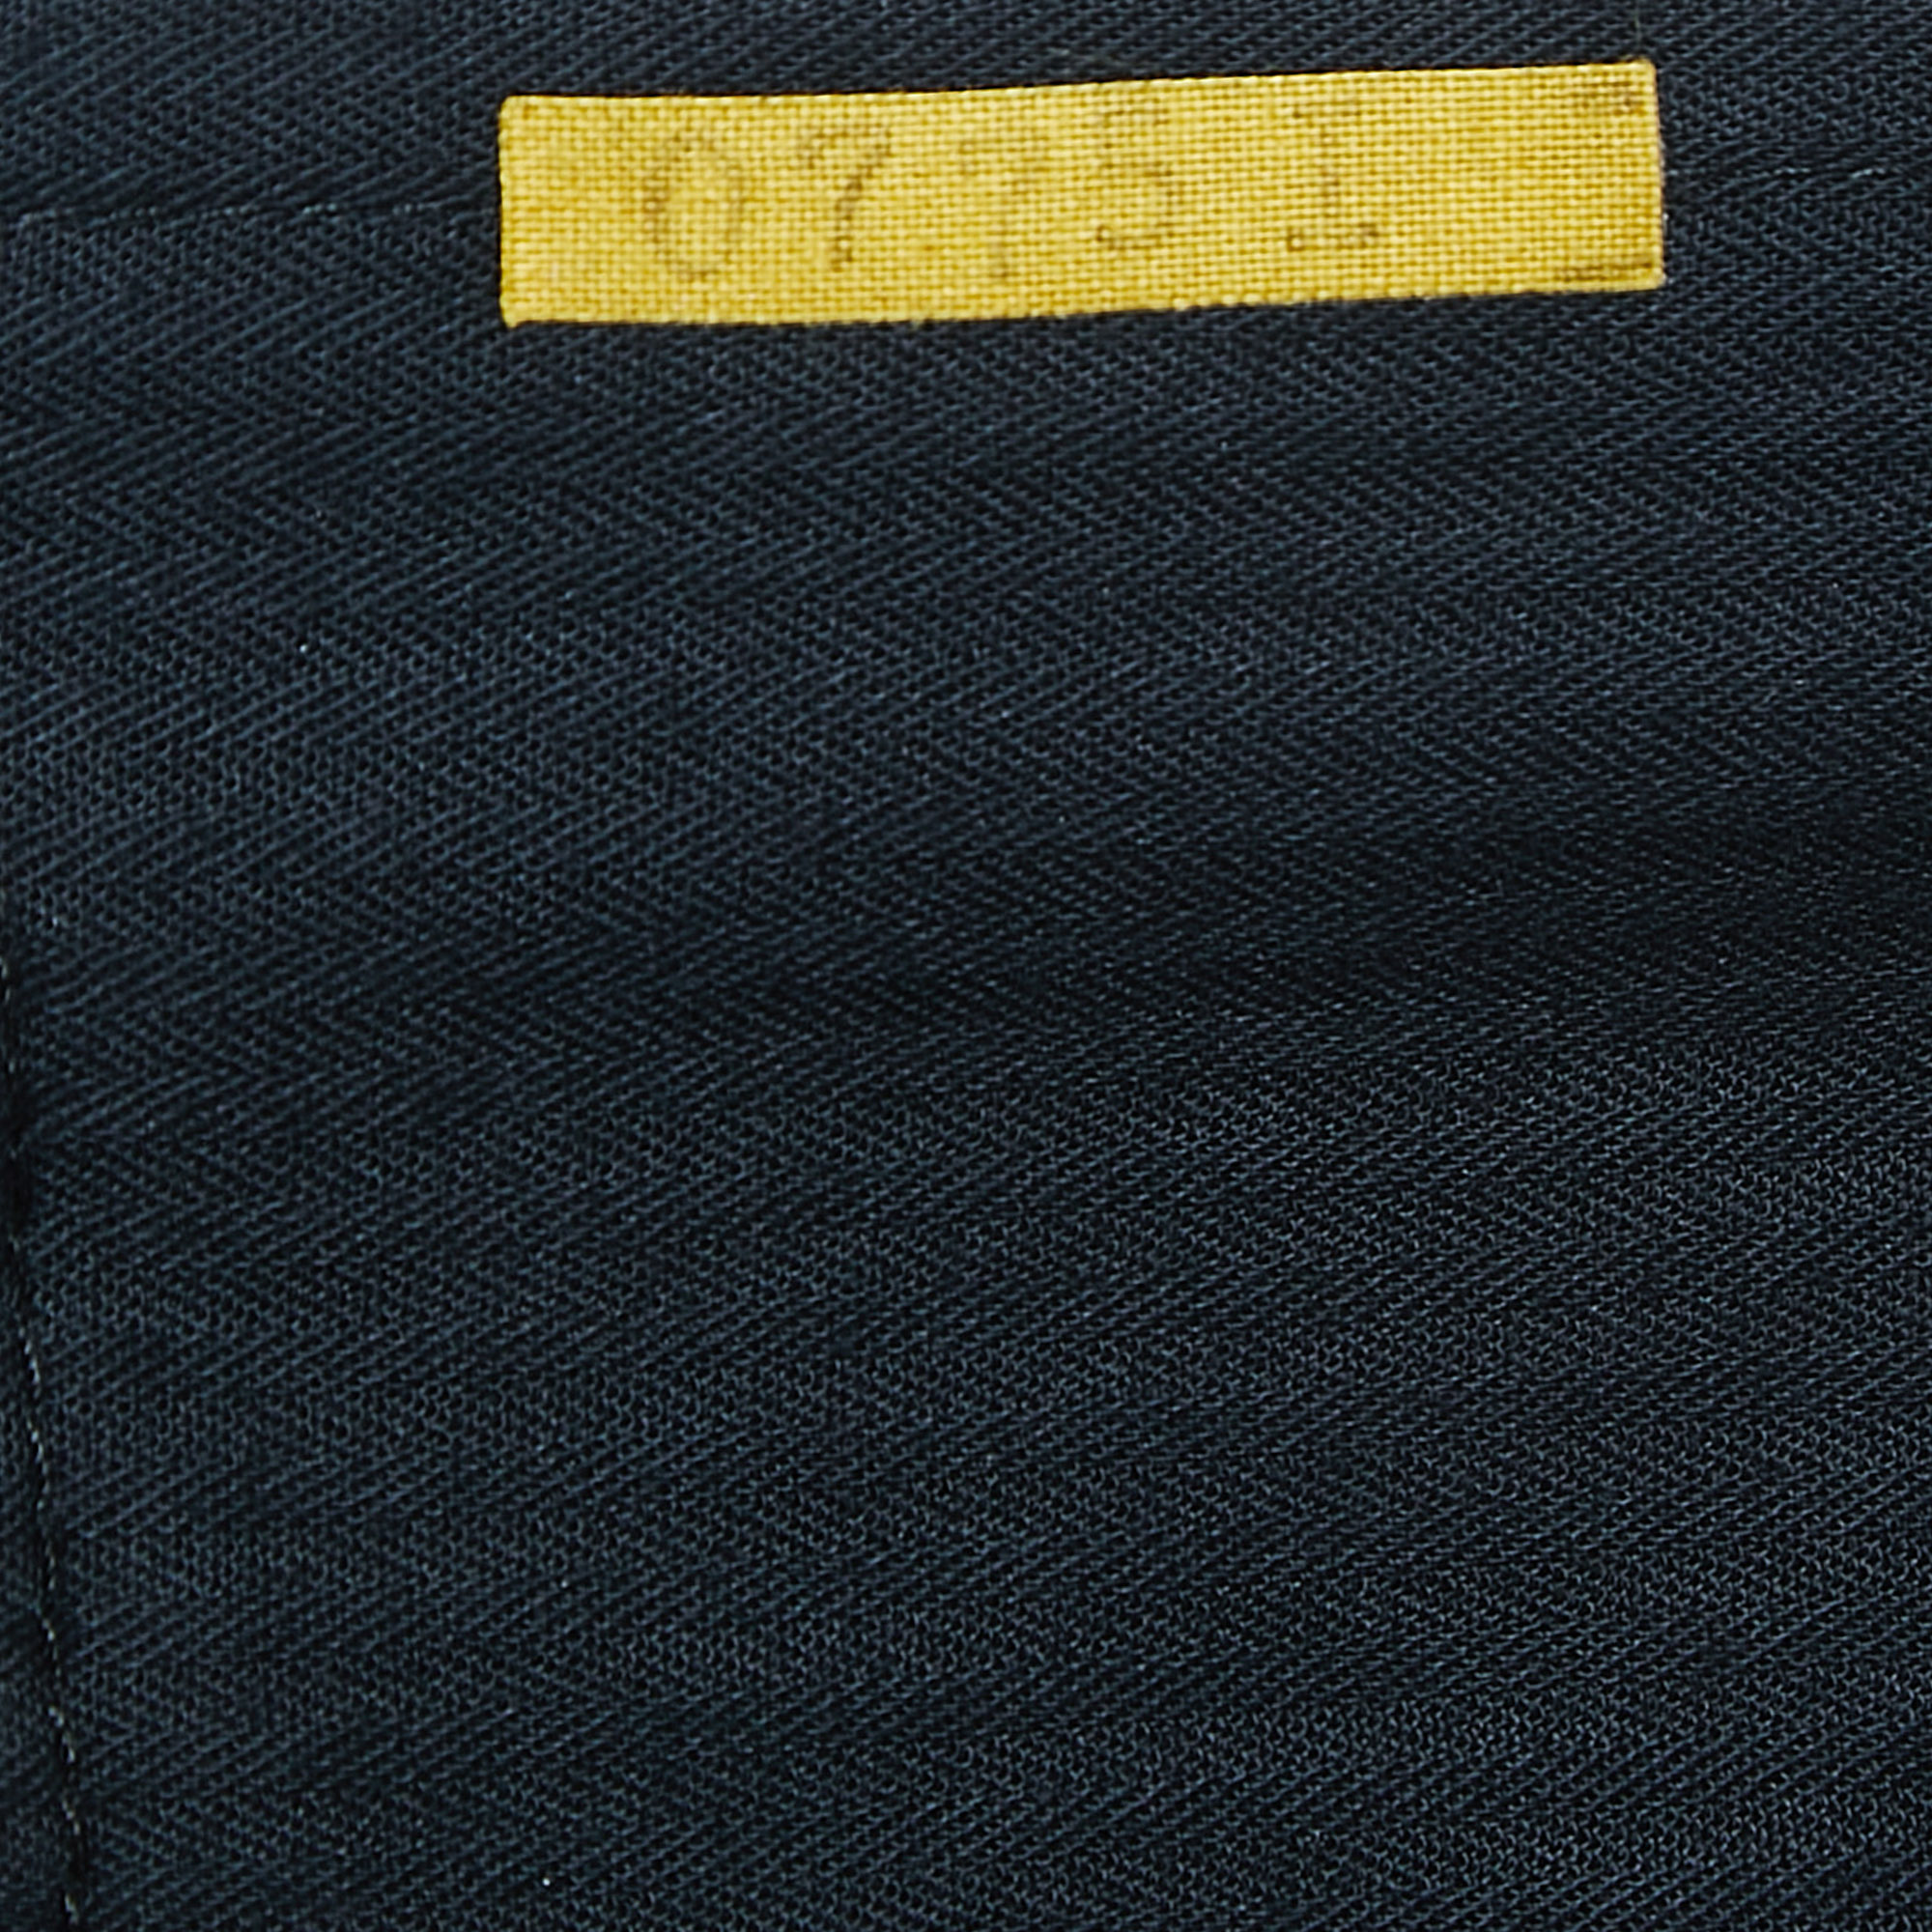 Giorgio Armani Navy Blue Linen Tailored Trousers XXL